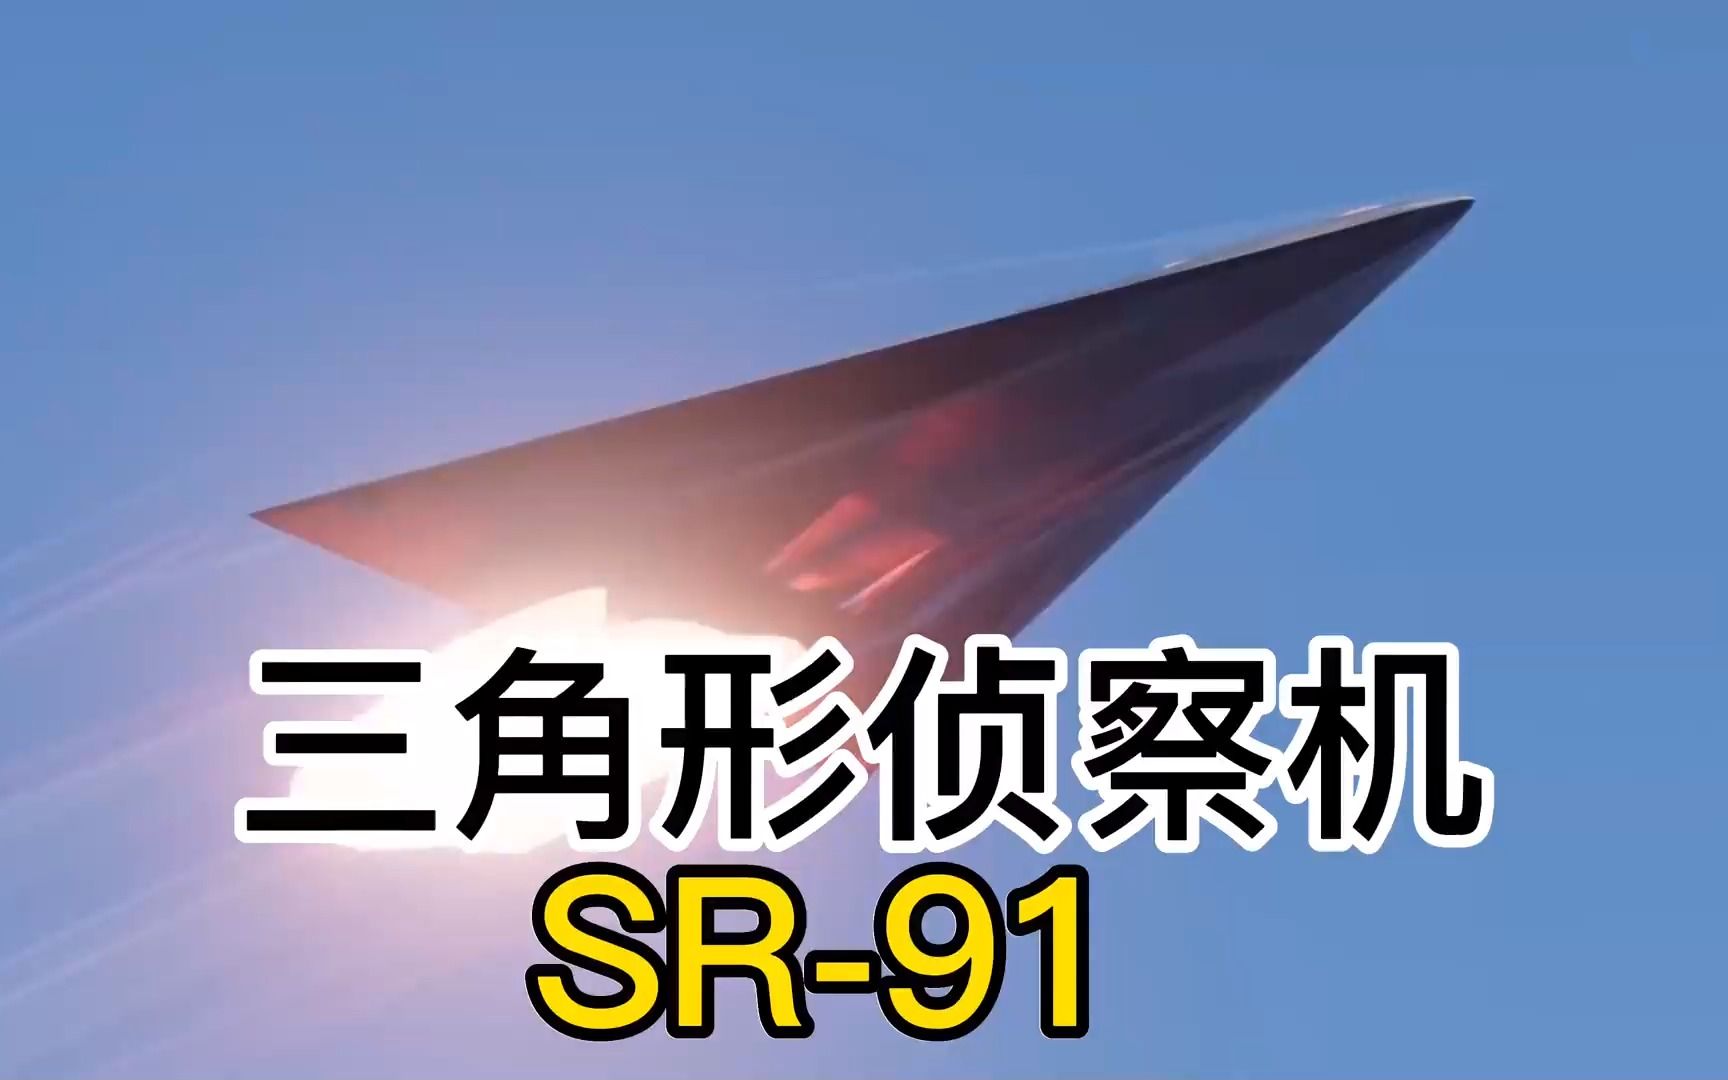 SR-91是否真的存在？